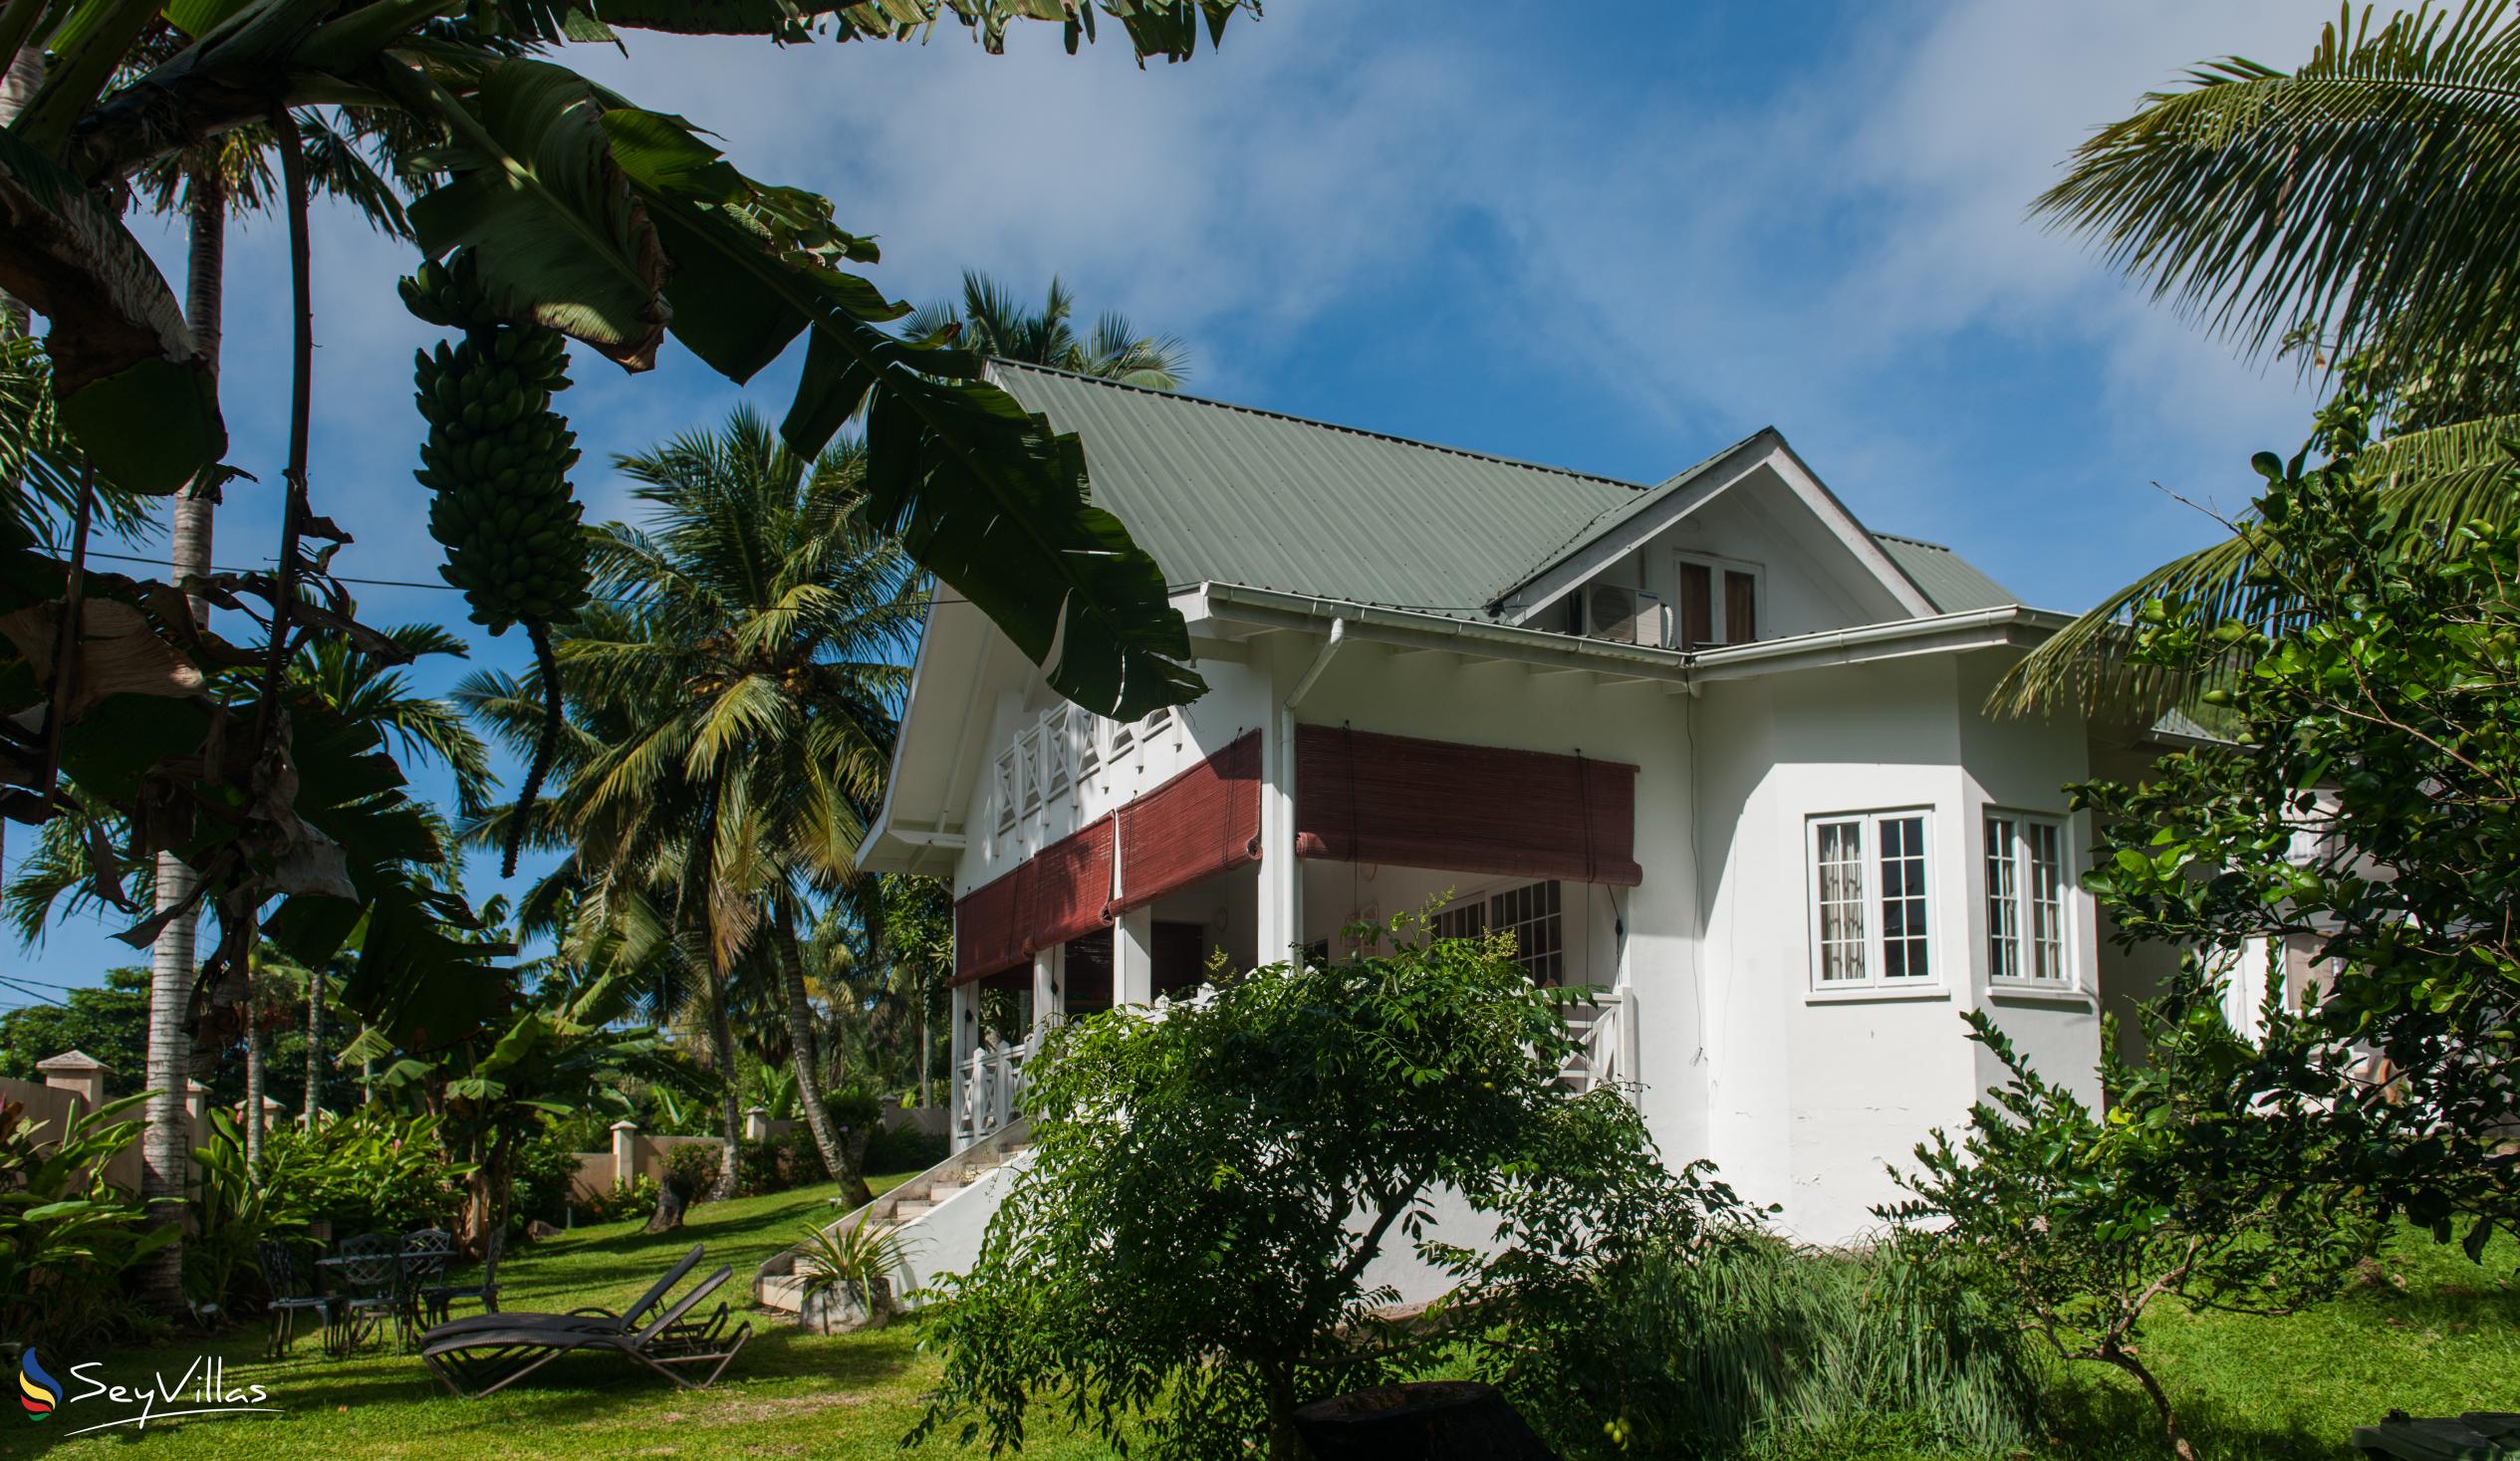 Photo 2: Le Domaine de Bacova - Outdoor area - Mahé (Seychelles)